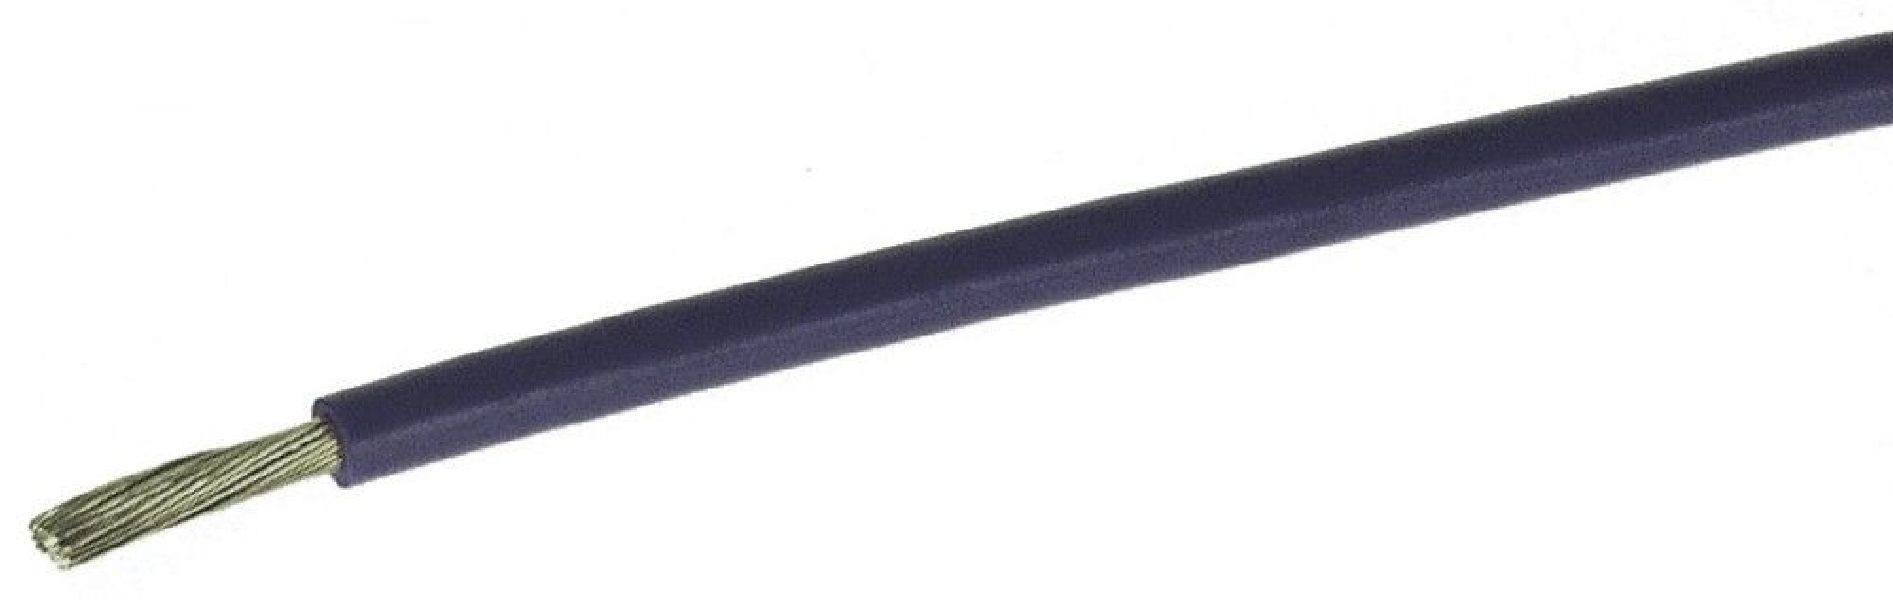 H07V-K - Litze verzinnt - 1 x 0,5 mm², schwarz - Kabel